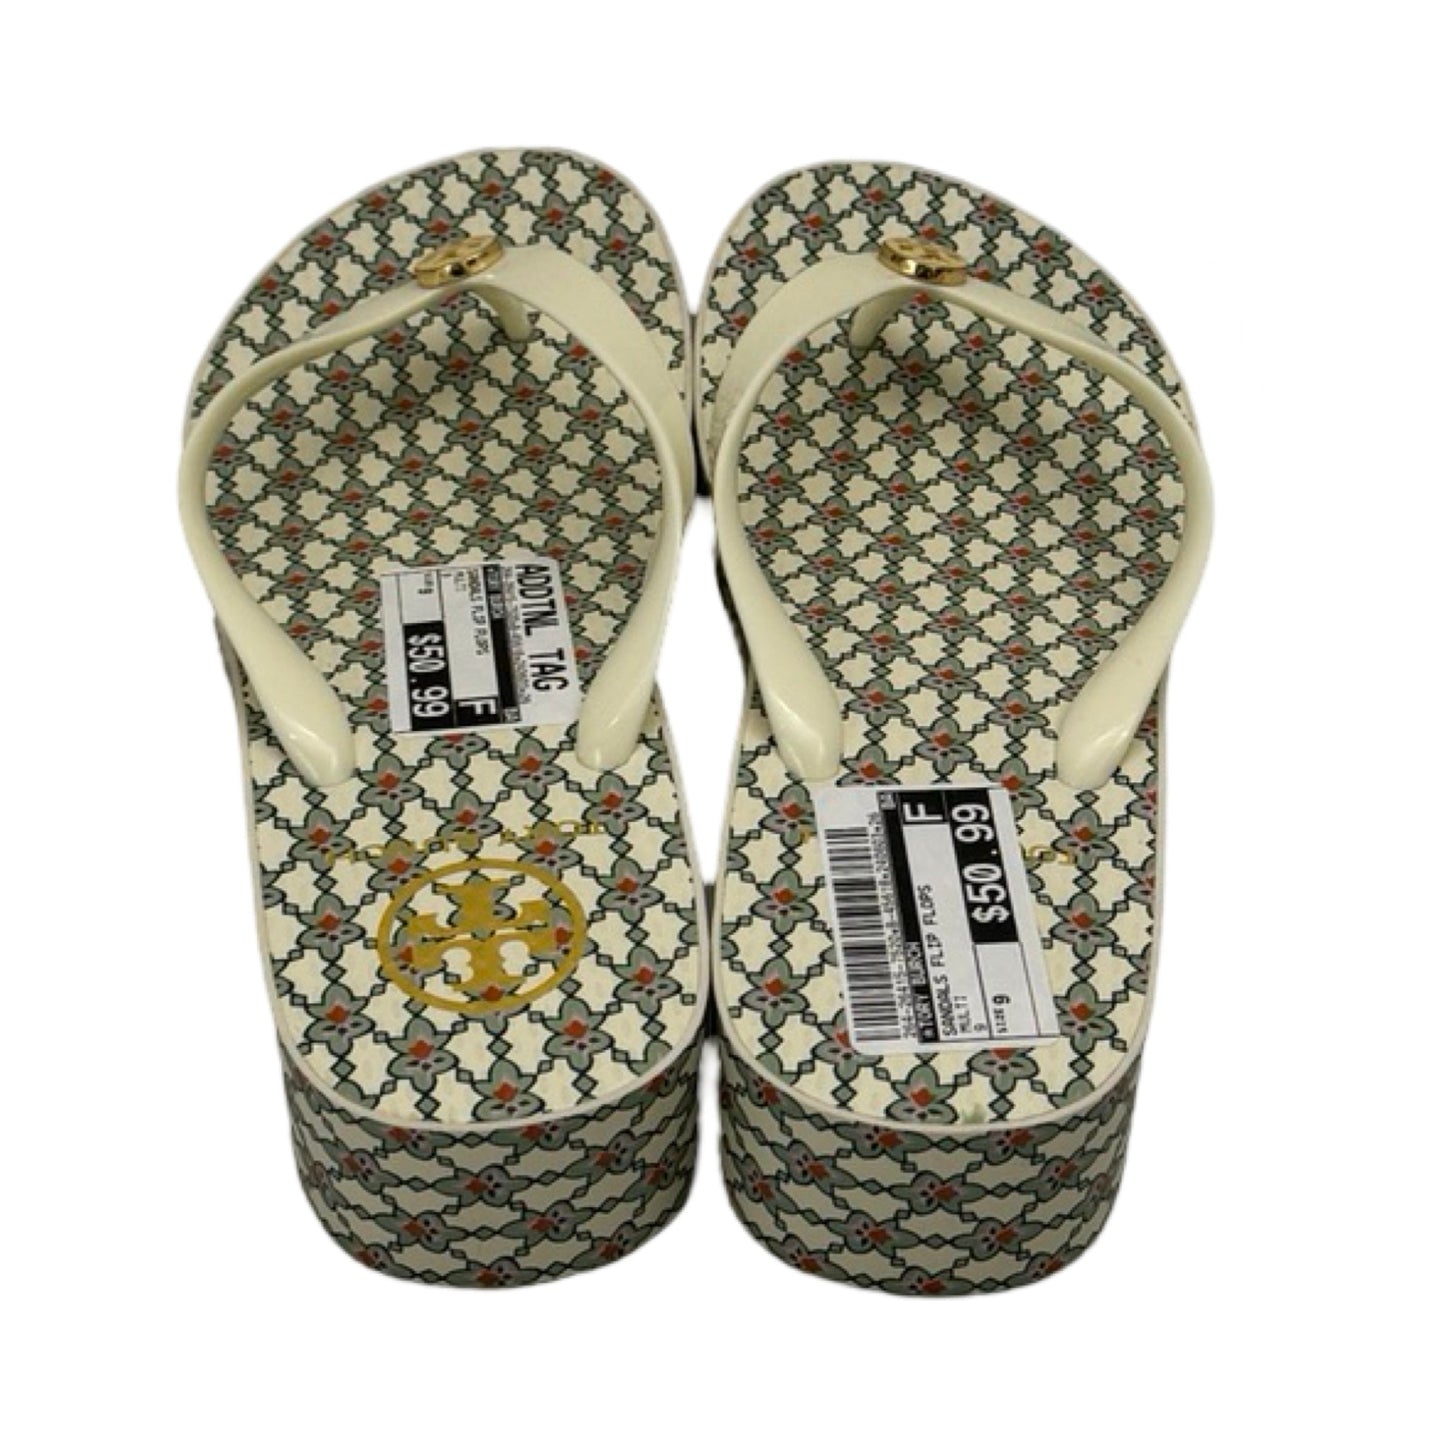 Multi-colored Sandals Flip Flops Designer Tory Burch, Size 9